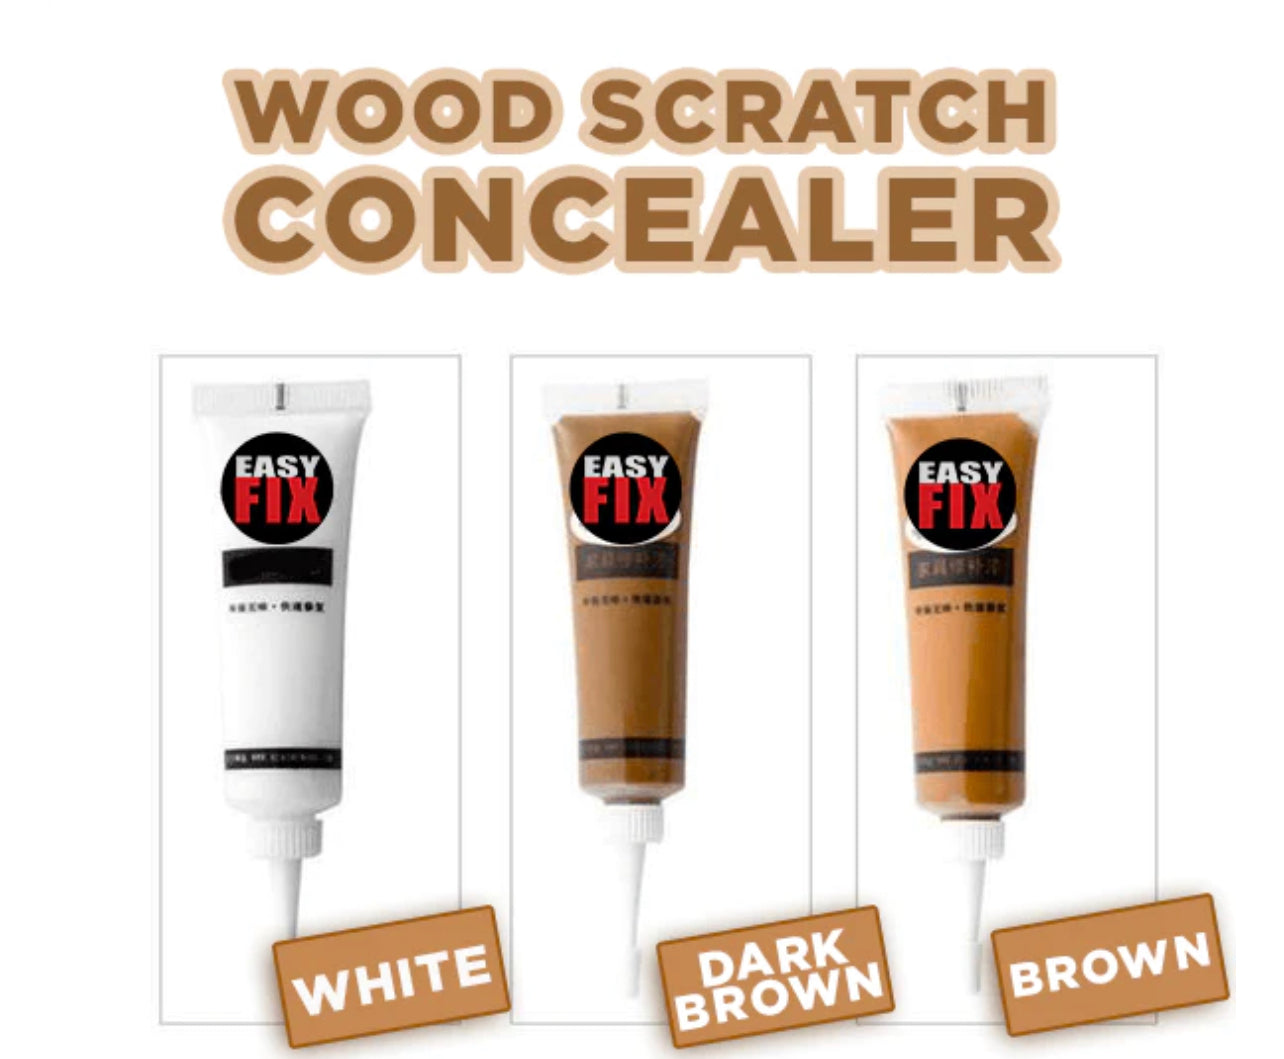 Wood Scratch Concealer (60% OFF TODAY!)